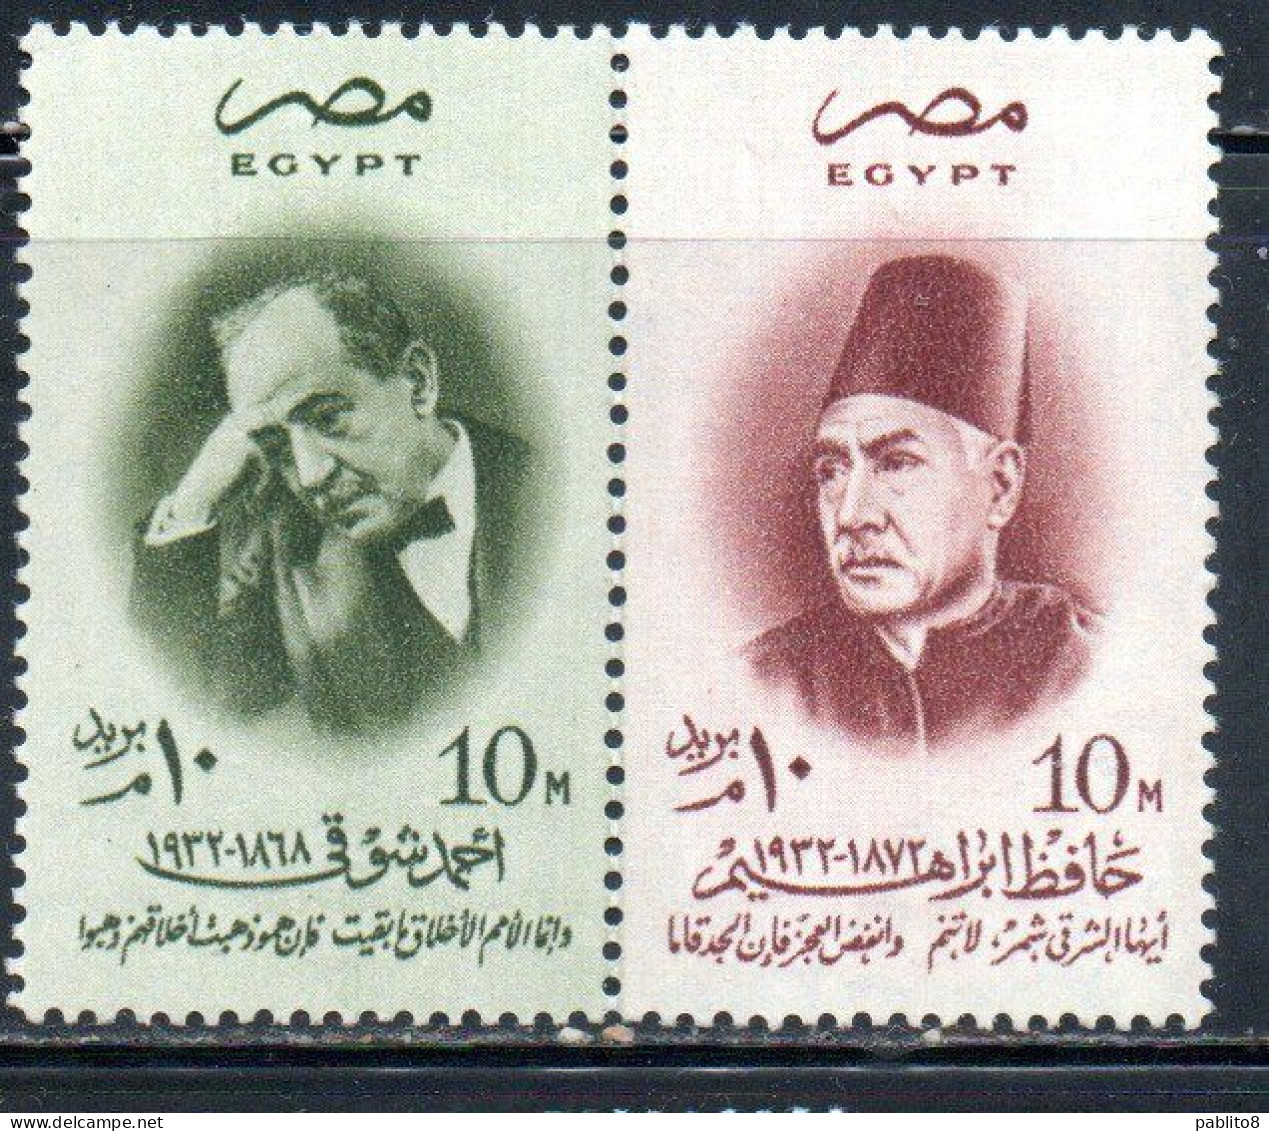 UAR EGYPT EGITTO 1957 HAFEZ IBRAHIM AND AHMED SHAWKY POETS MNH - Unused Stamps